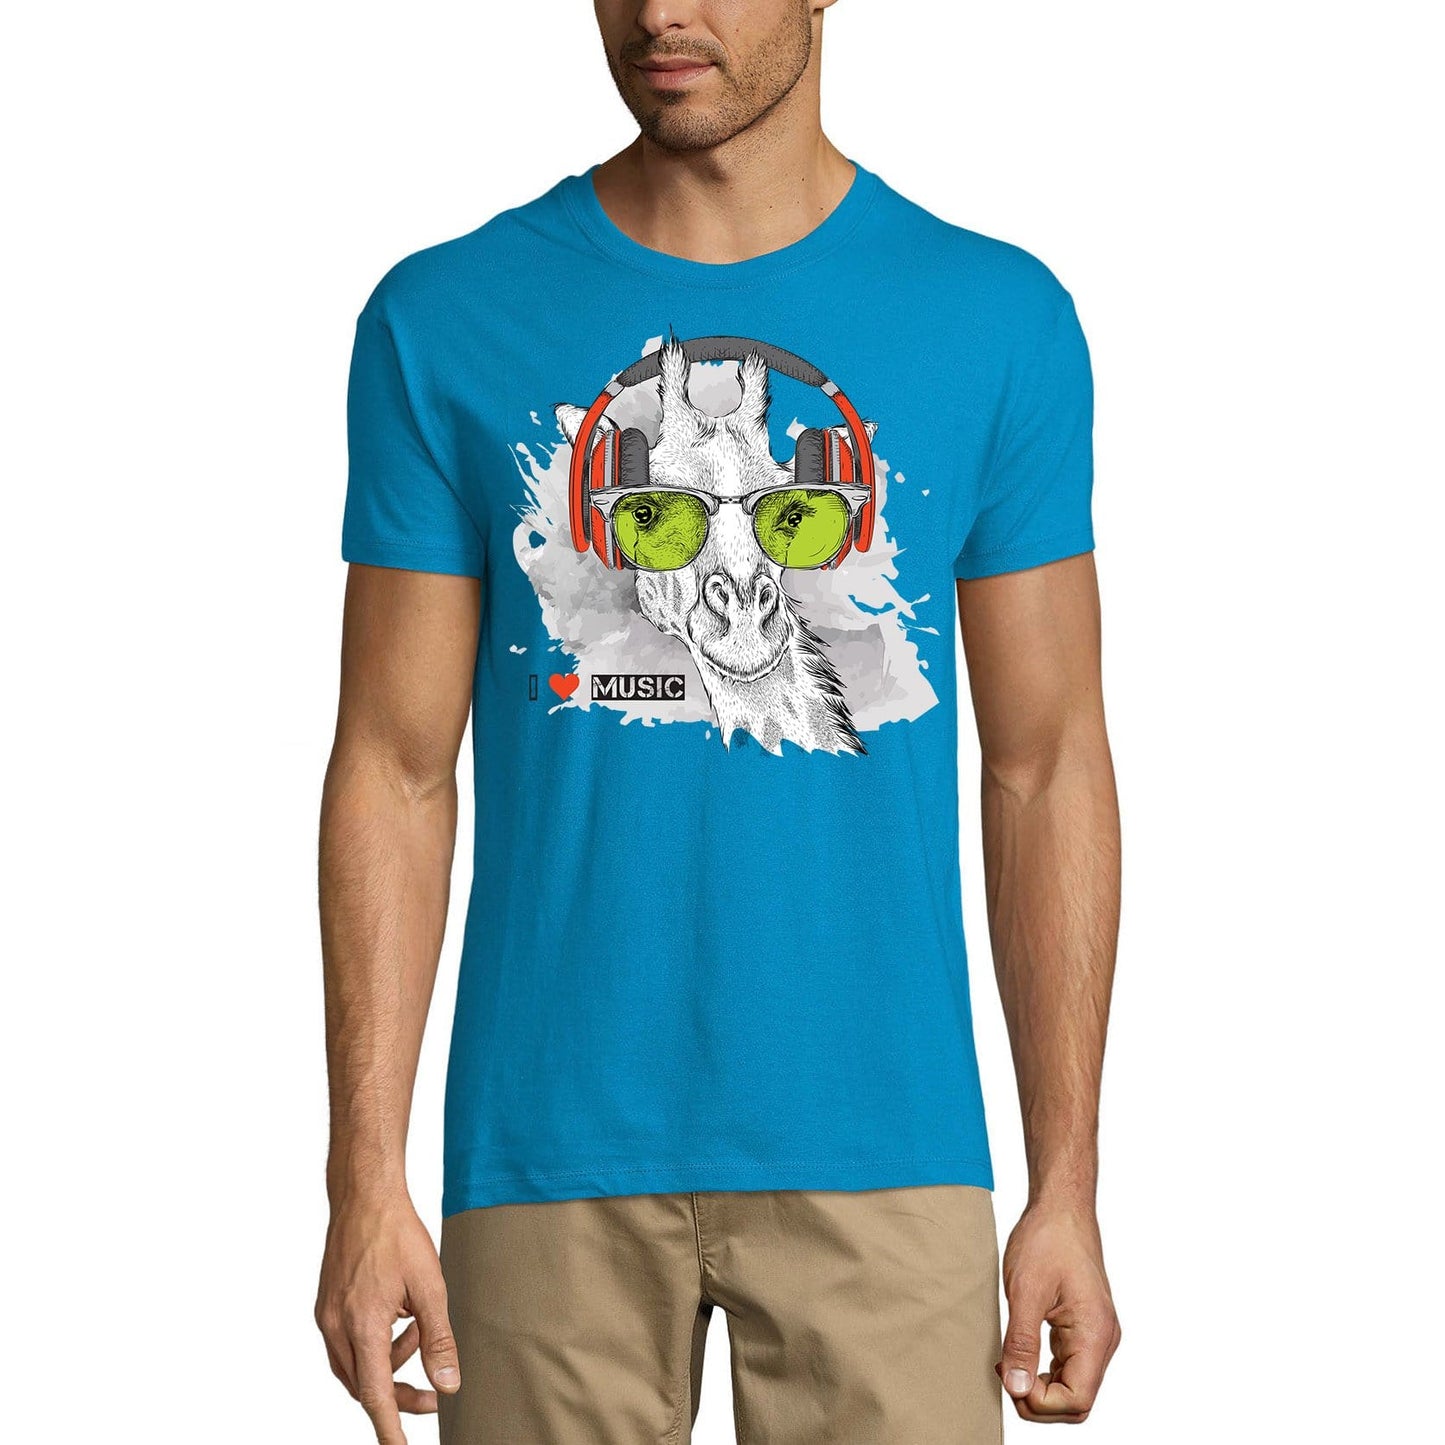 ULTRABASIC Men's Novelty T-Shirt Cool Giraffe - I Love Music Funny Tee Shirt